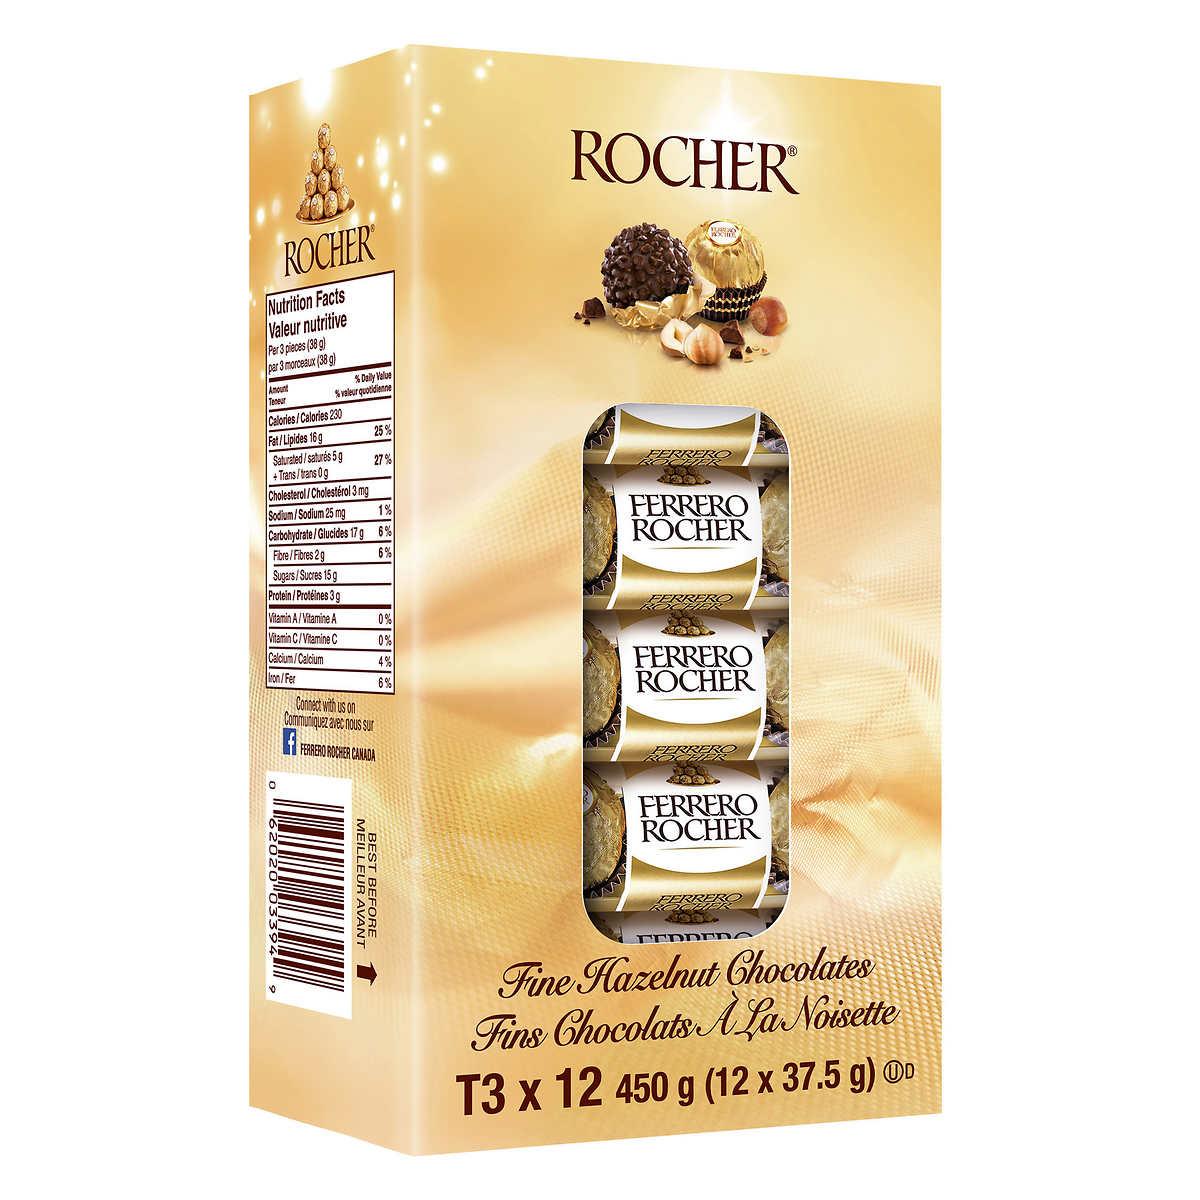 Chocolat aux noisettes Ferrero Rocher Grand, paq. 125